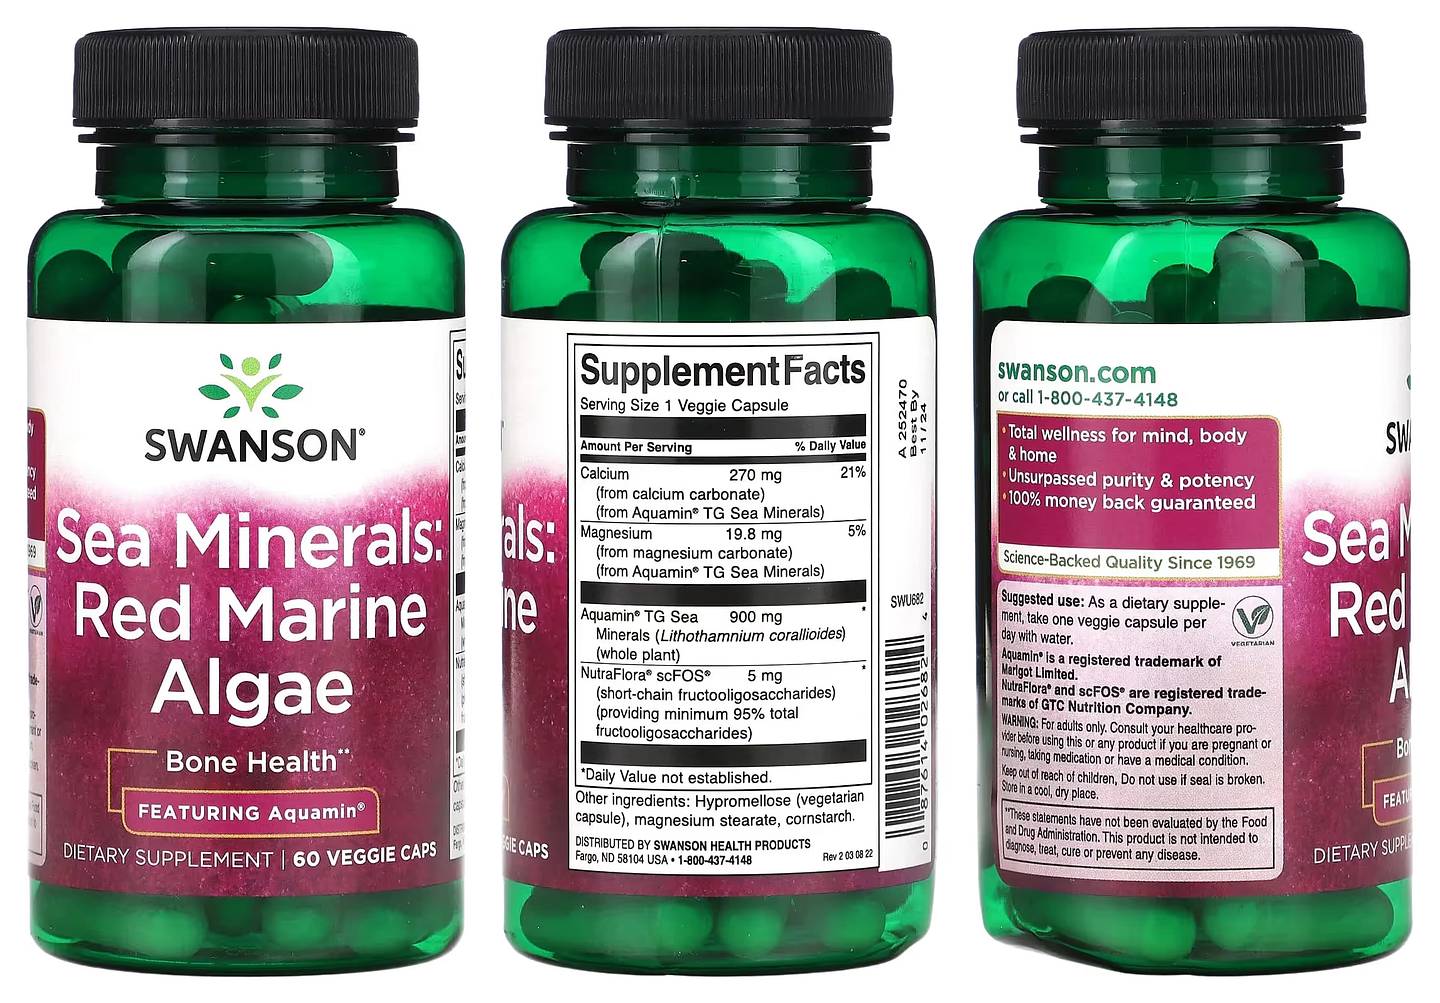 Swanson, Sea Minerals: Red Marine Algae packaging